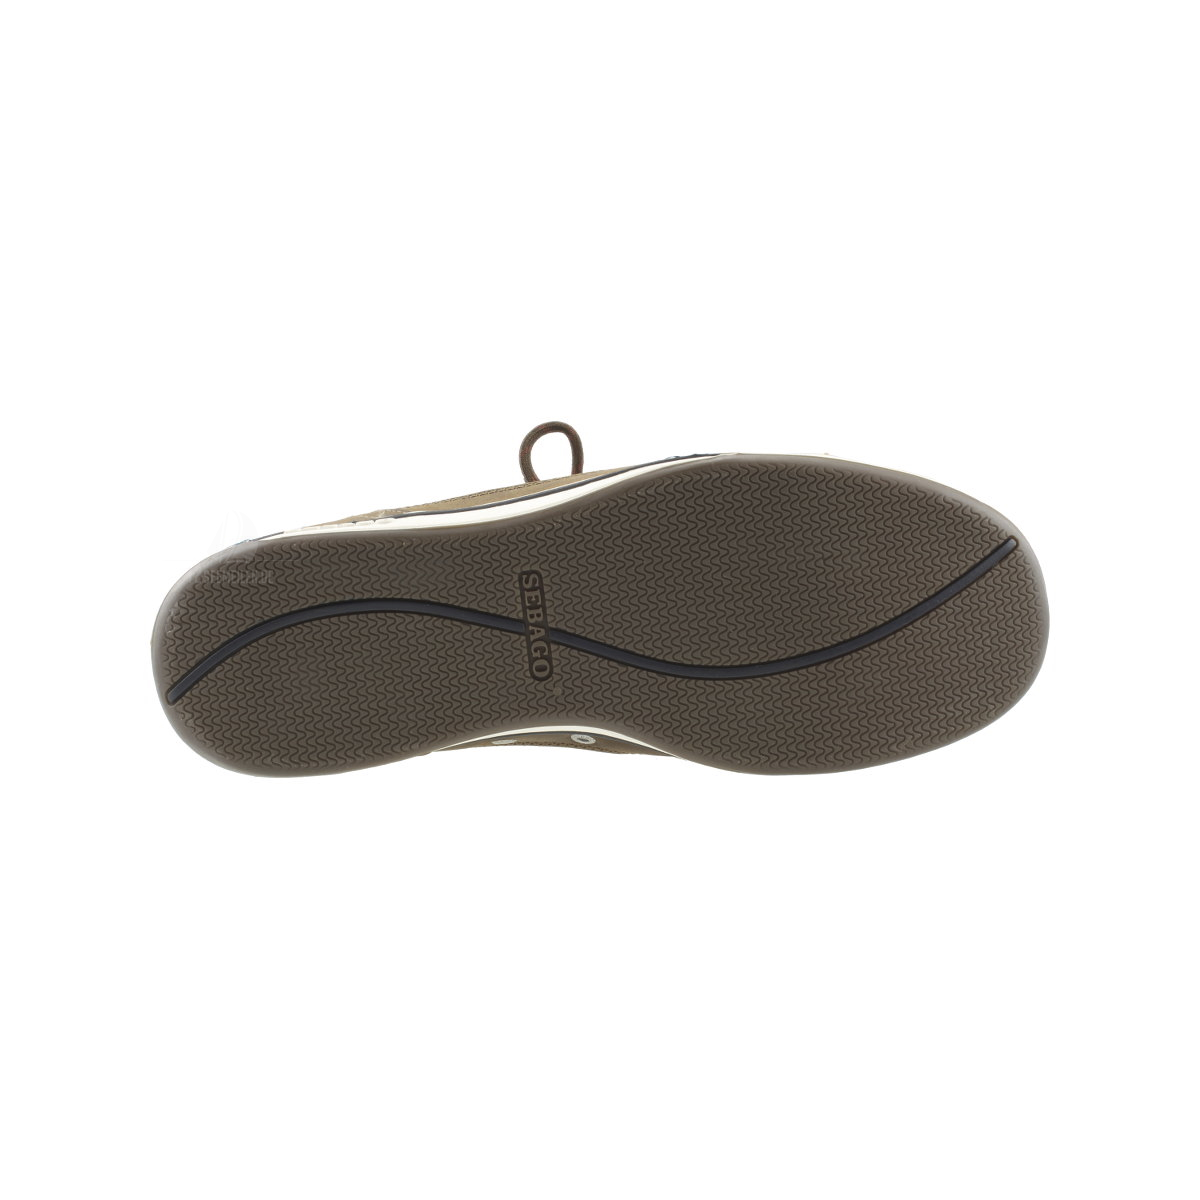 Sebago Triton Three-Eye chaussures bateau homme walnut leather, taille EU 42 (US 8,5)